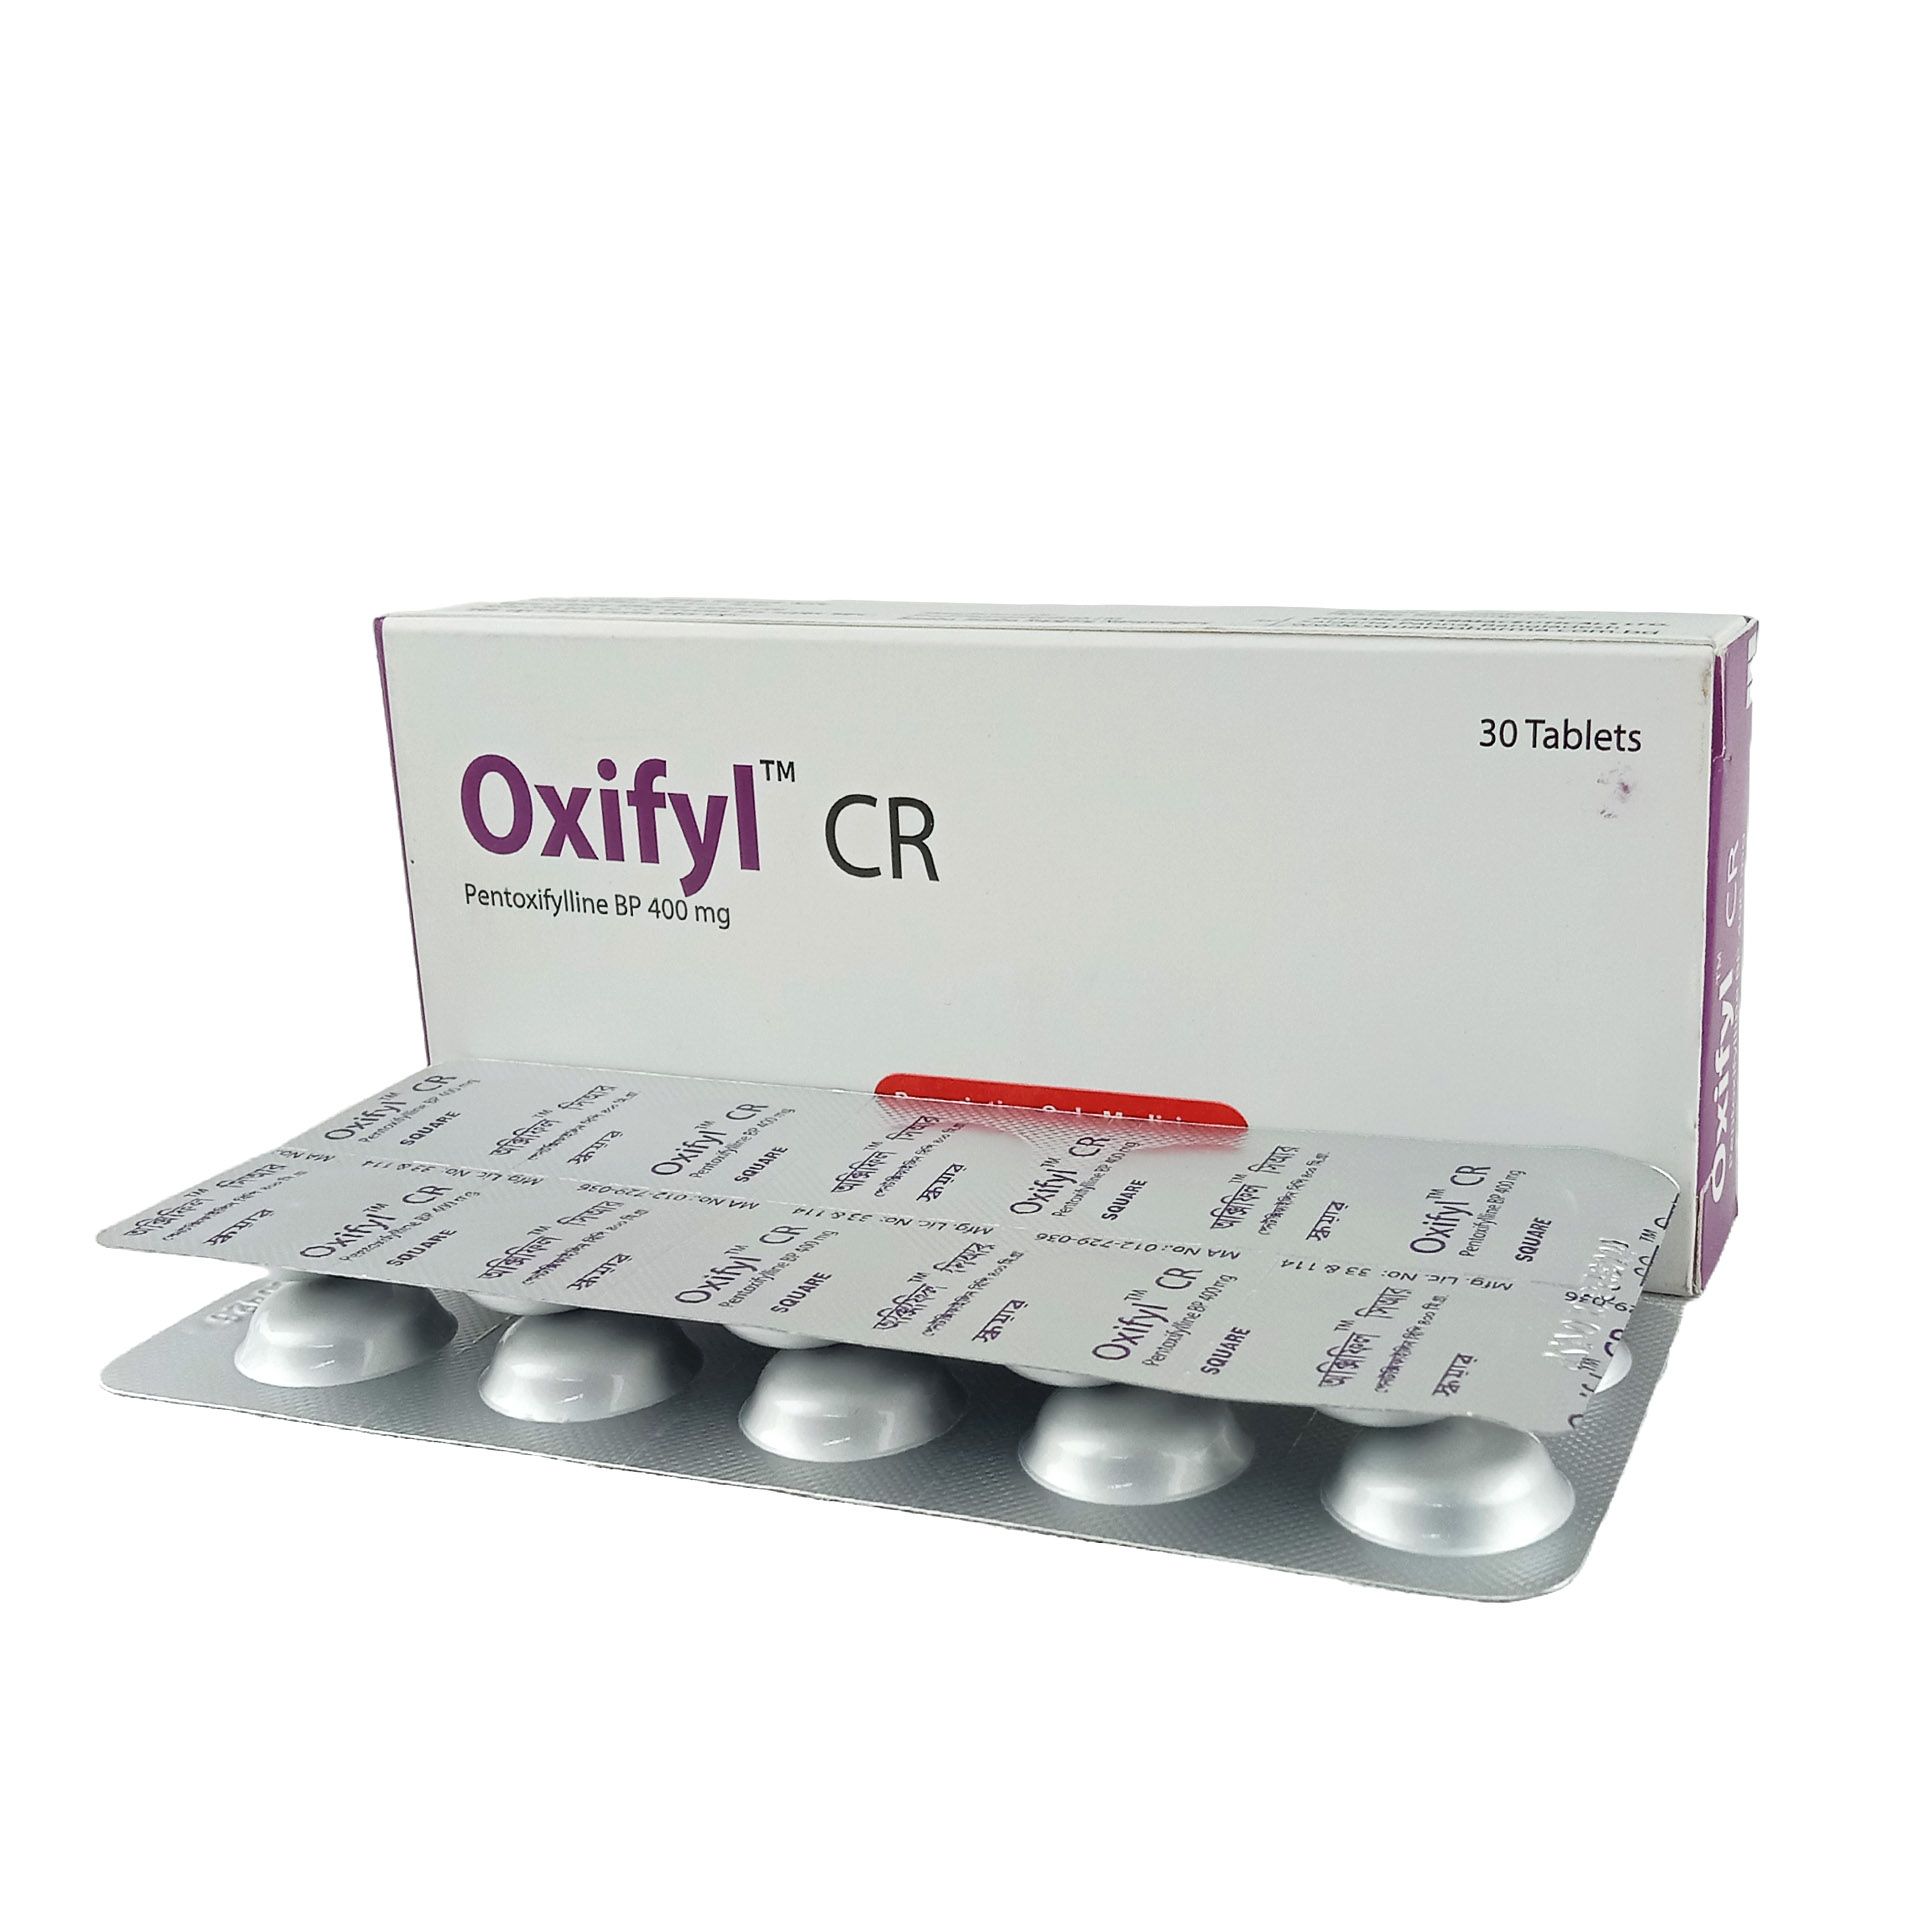 Oxifyl CR 400mg Tablet